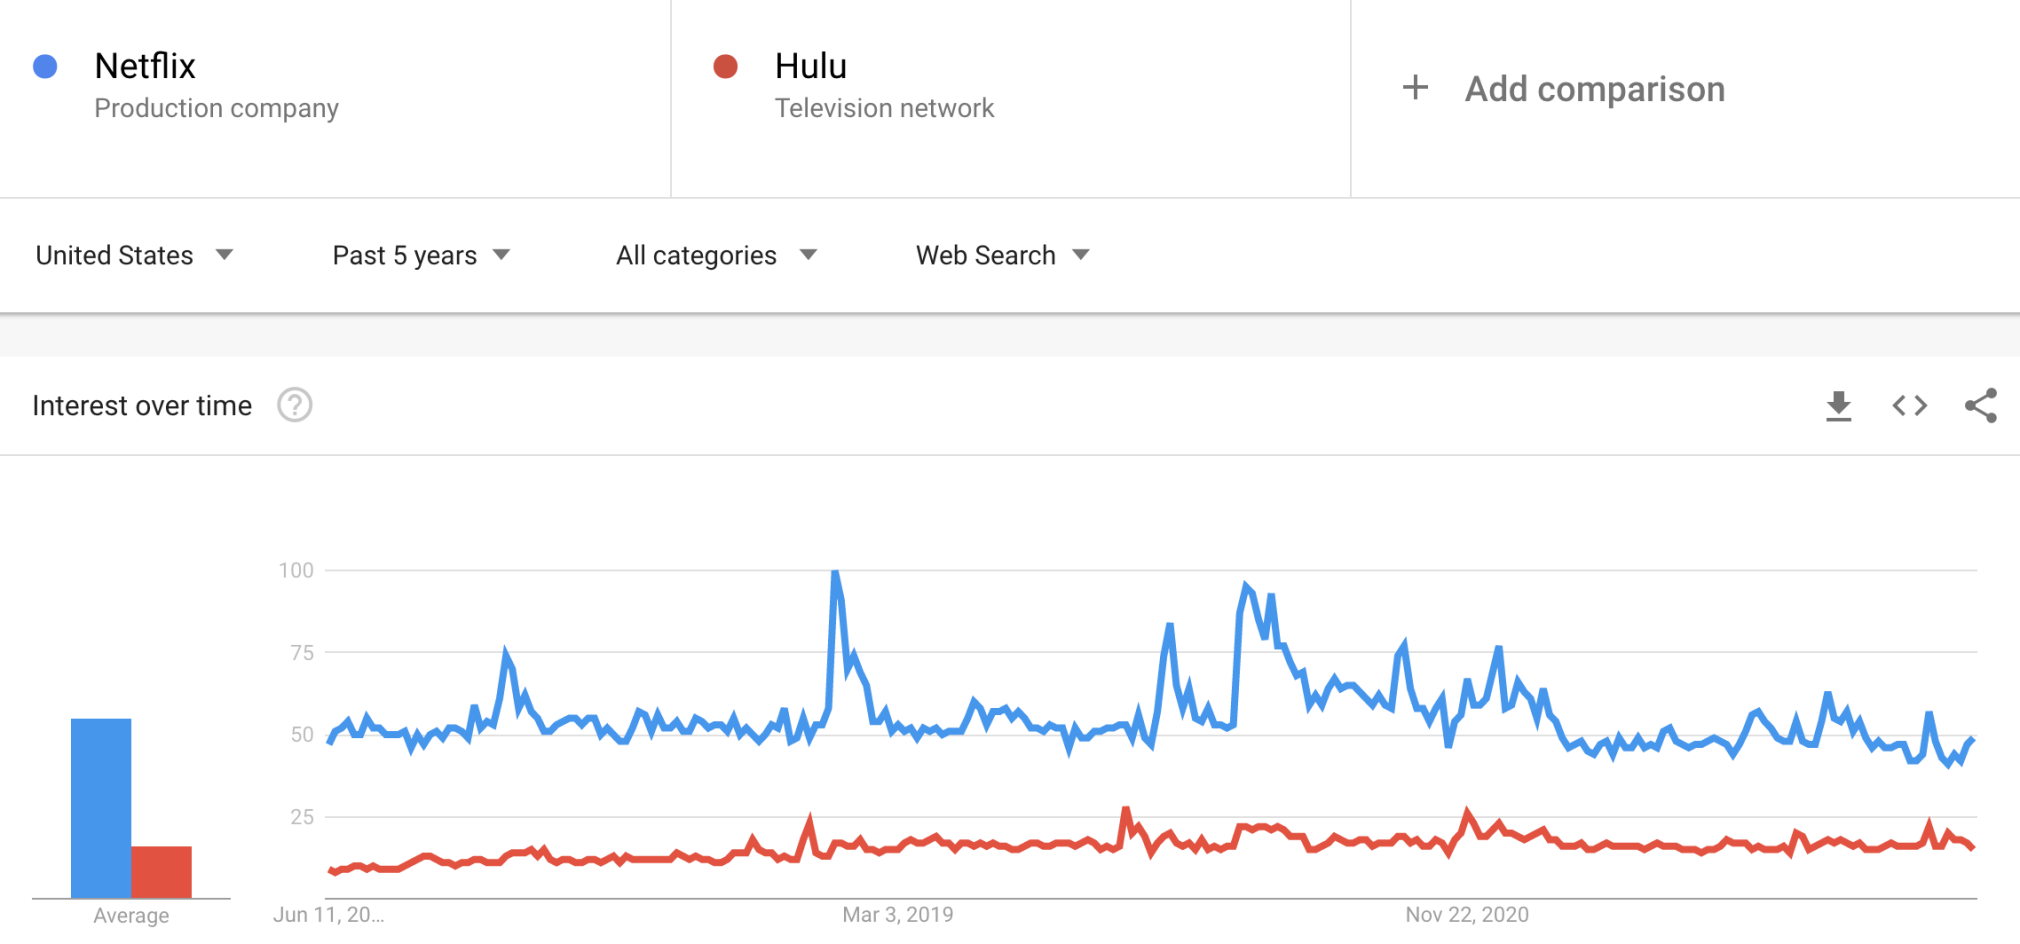 Netflix vs. Hulu comparison